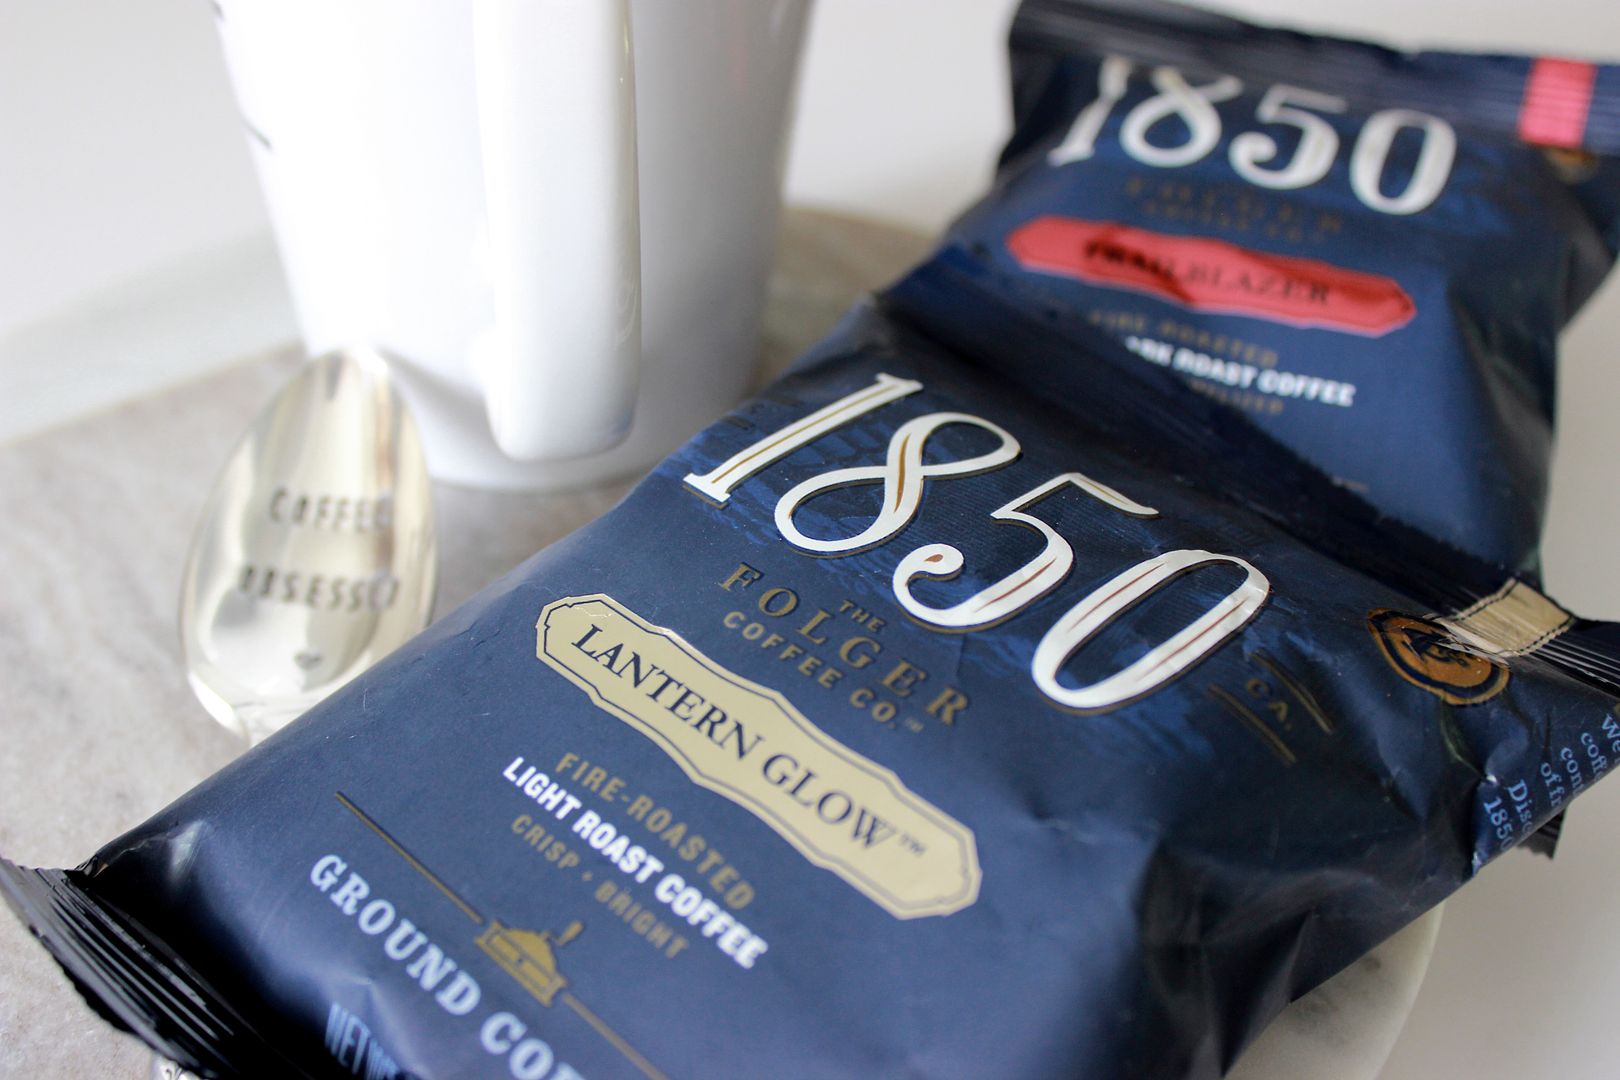 1850 Brand Coffee Flavor